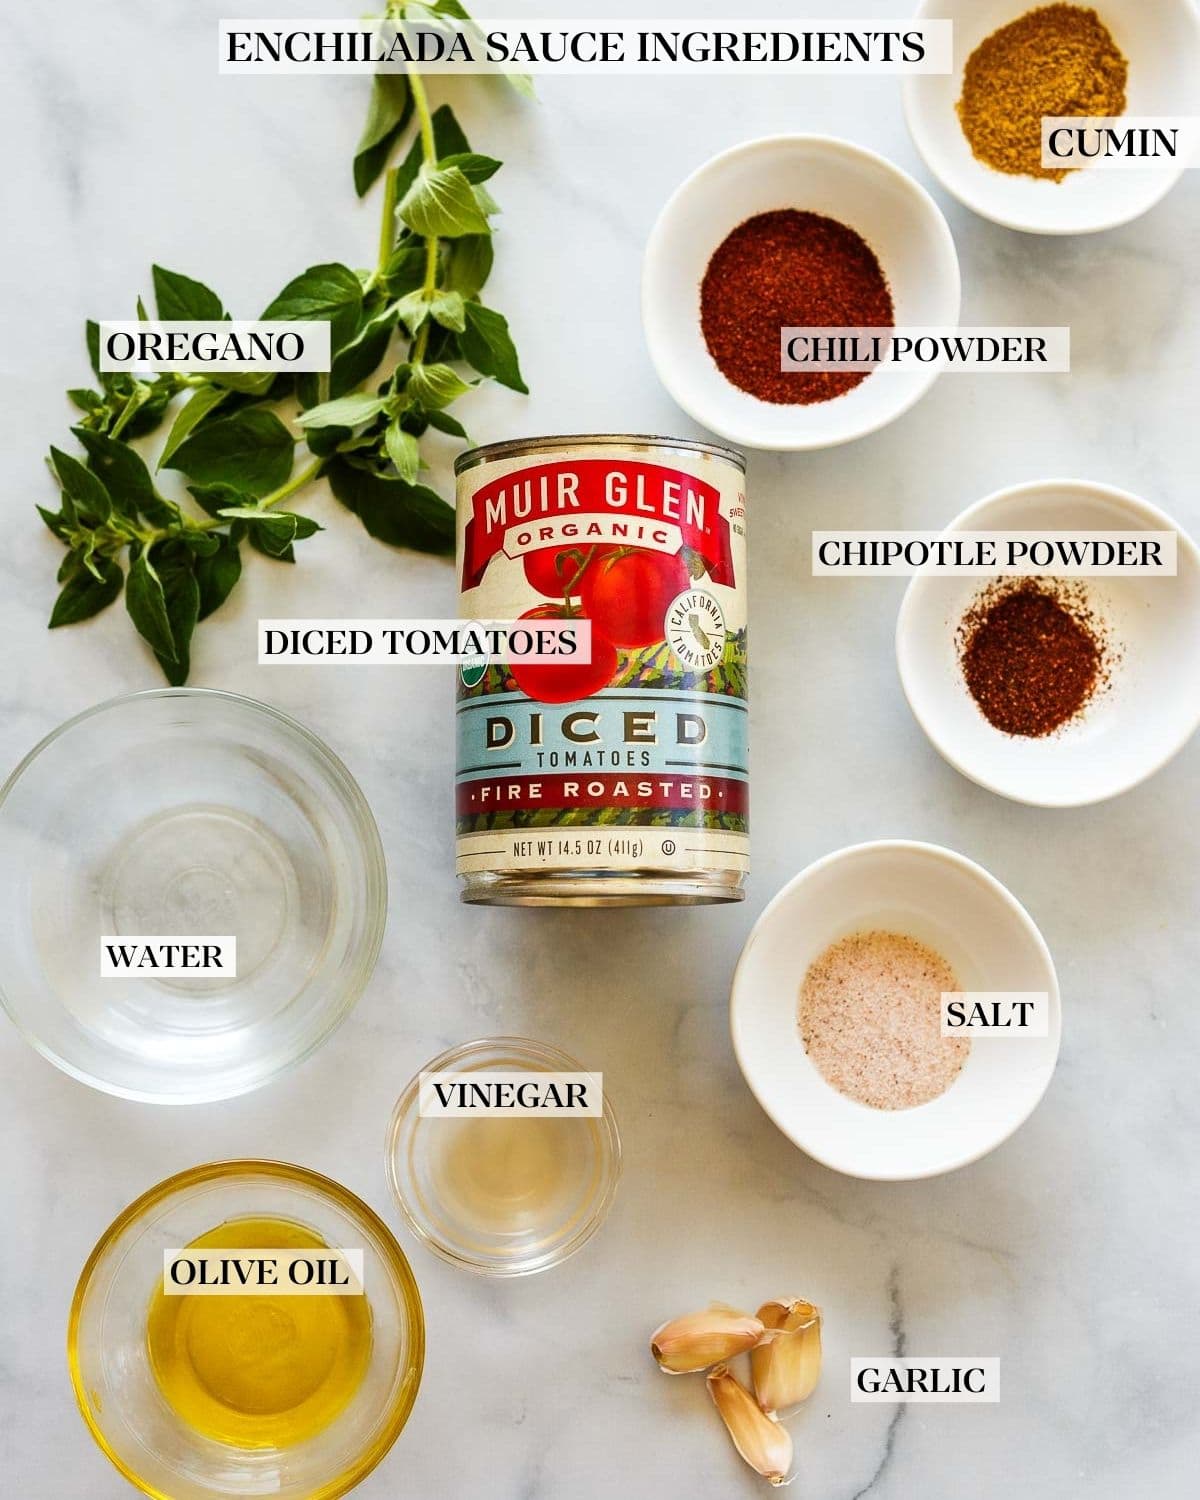 Enchilada Sauce Ingredients